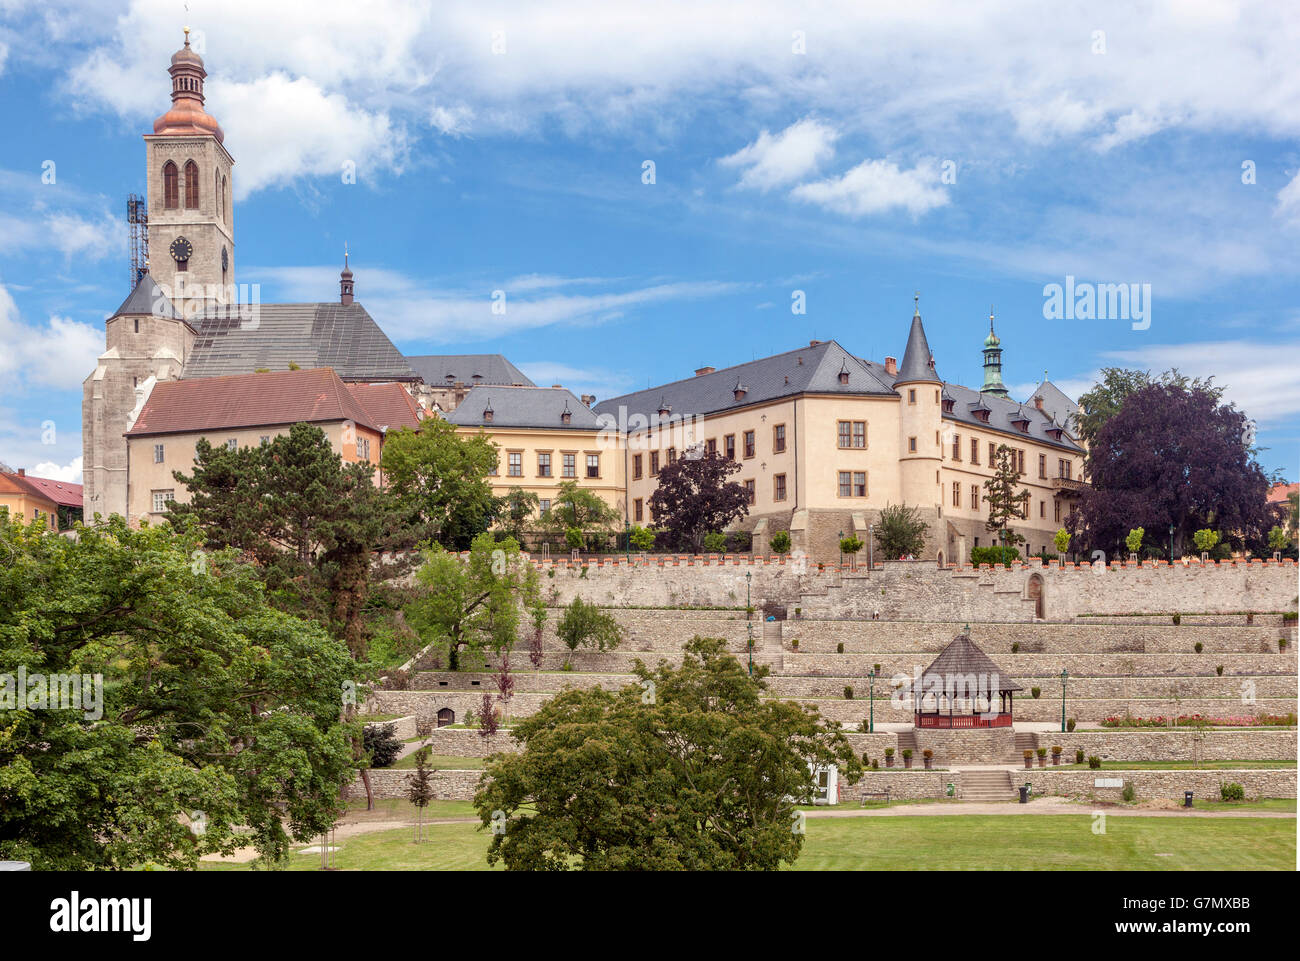 St James Church und Welscher Hof, Kutna Hora, UNESCO-Stadt, Tschechische Republik Stockfoto